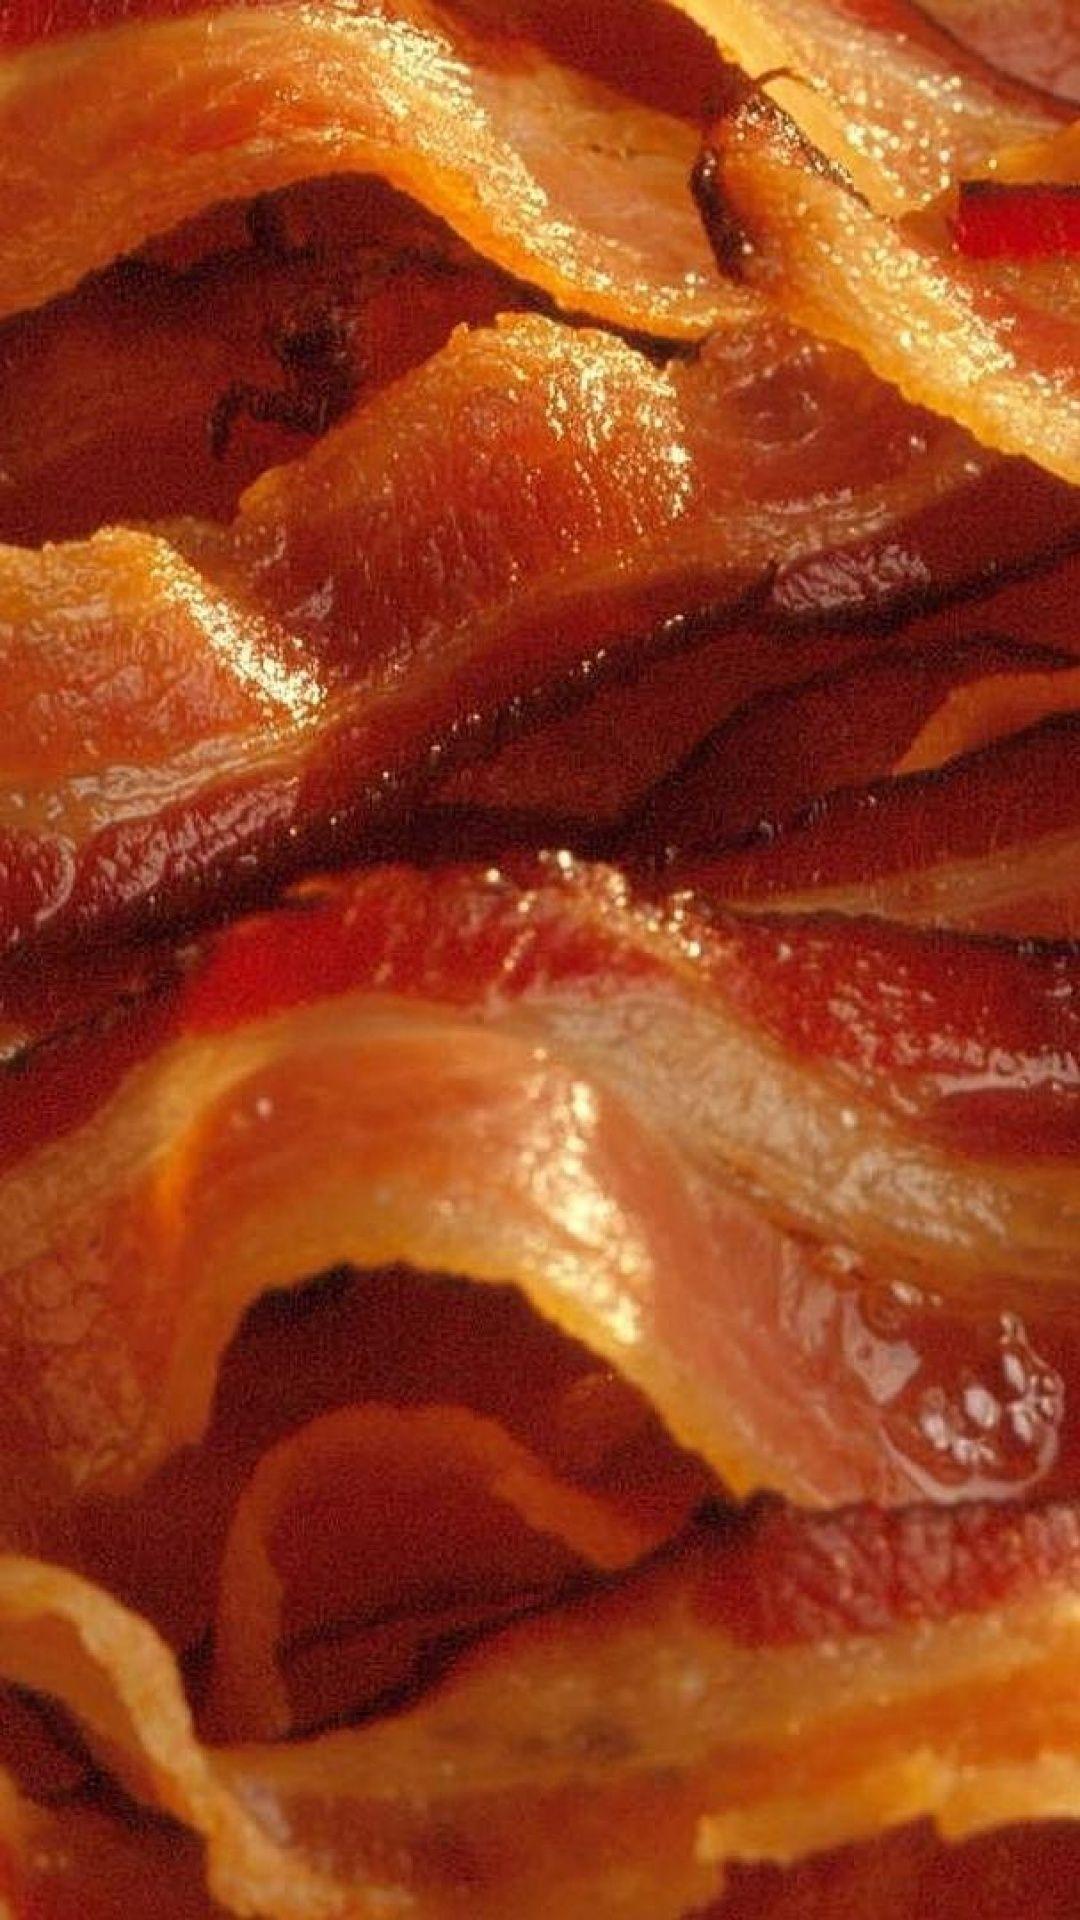 bacon wallpaper iphone